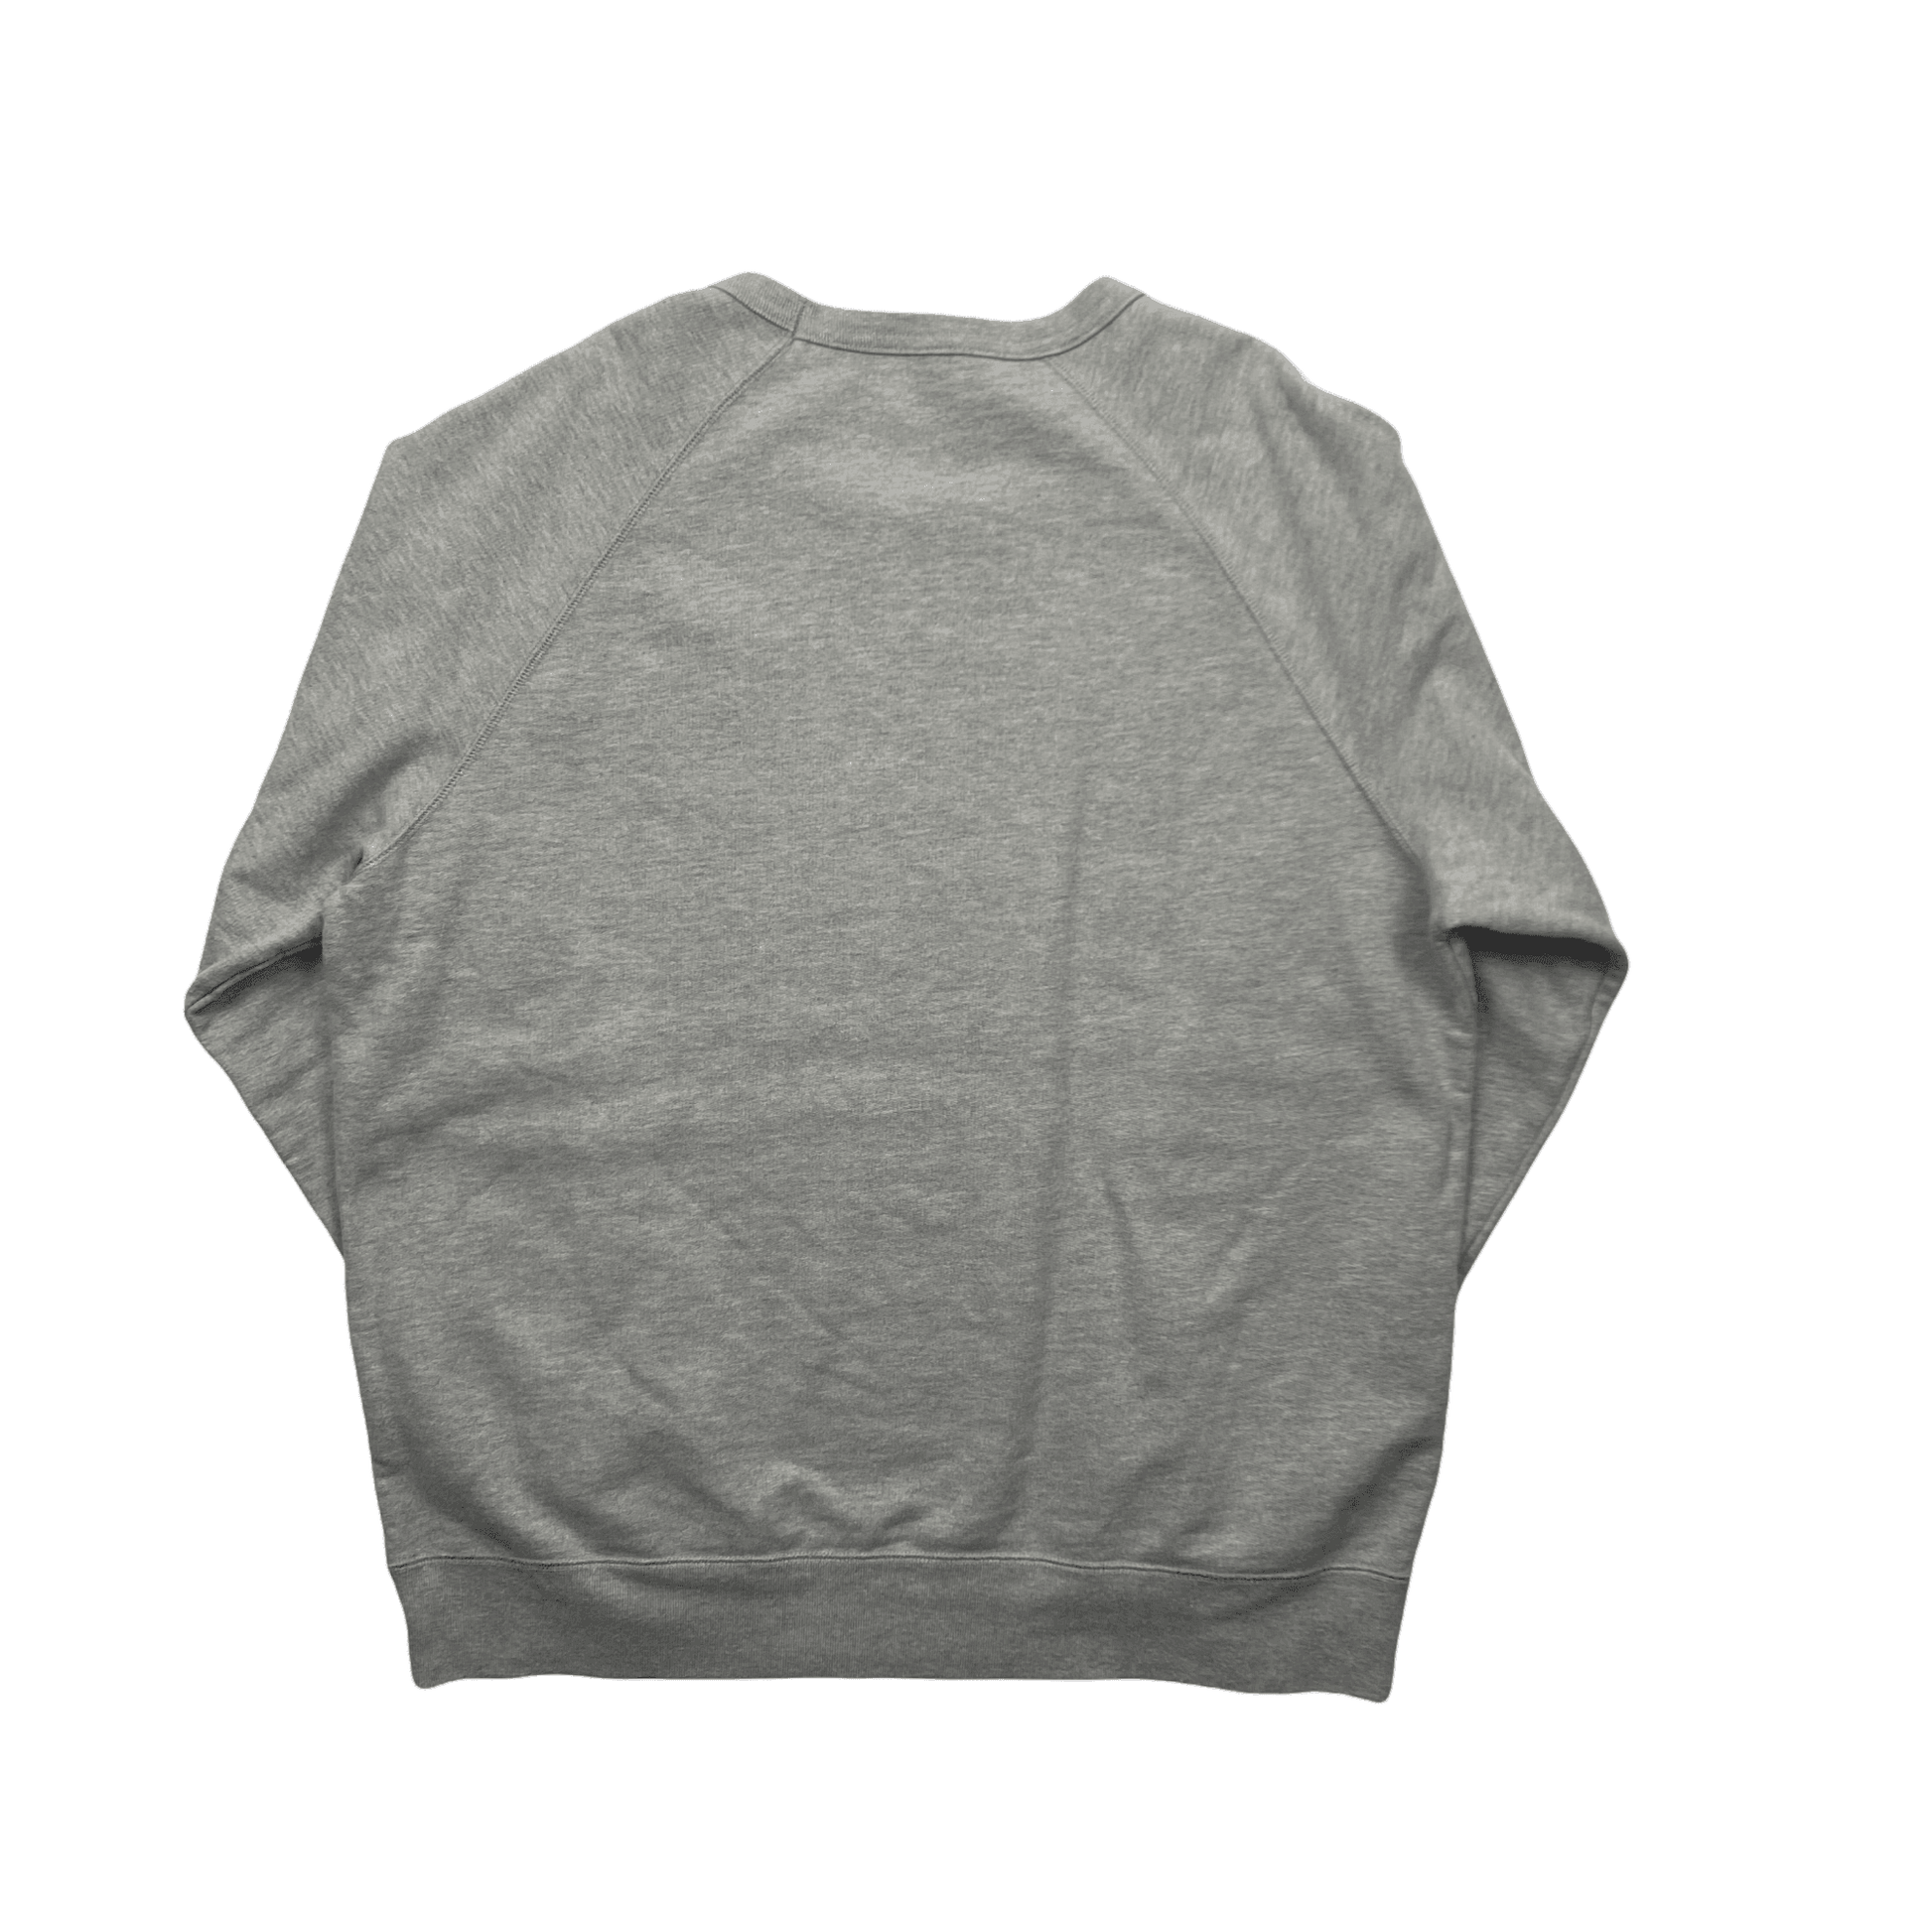 Grey October's Very Own (OVO) Sweatshirt - Extra Large - The Streetwear Studio